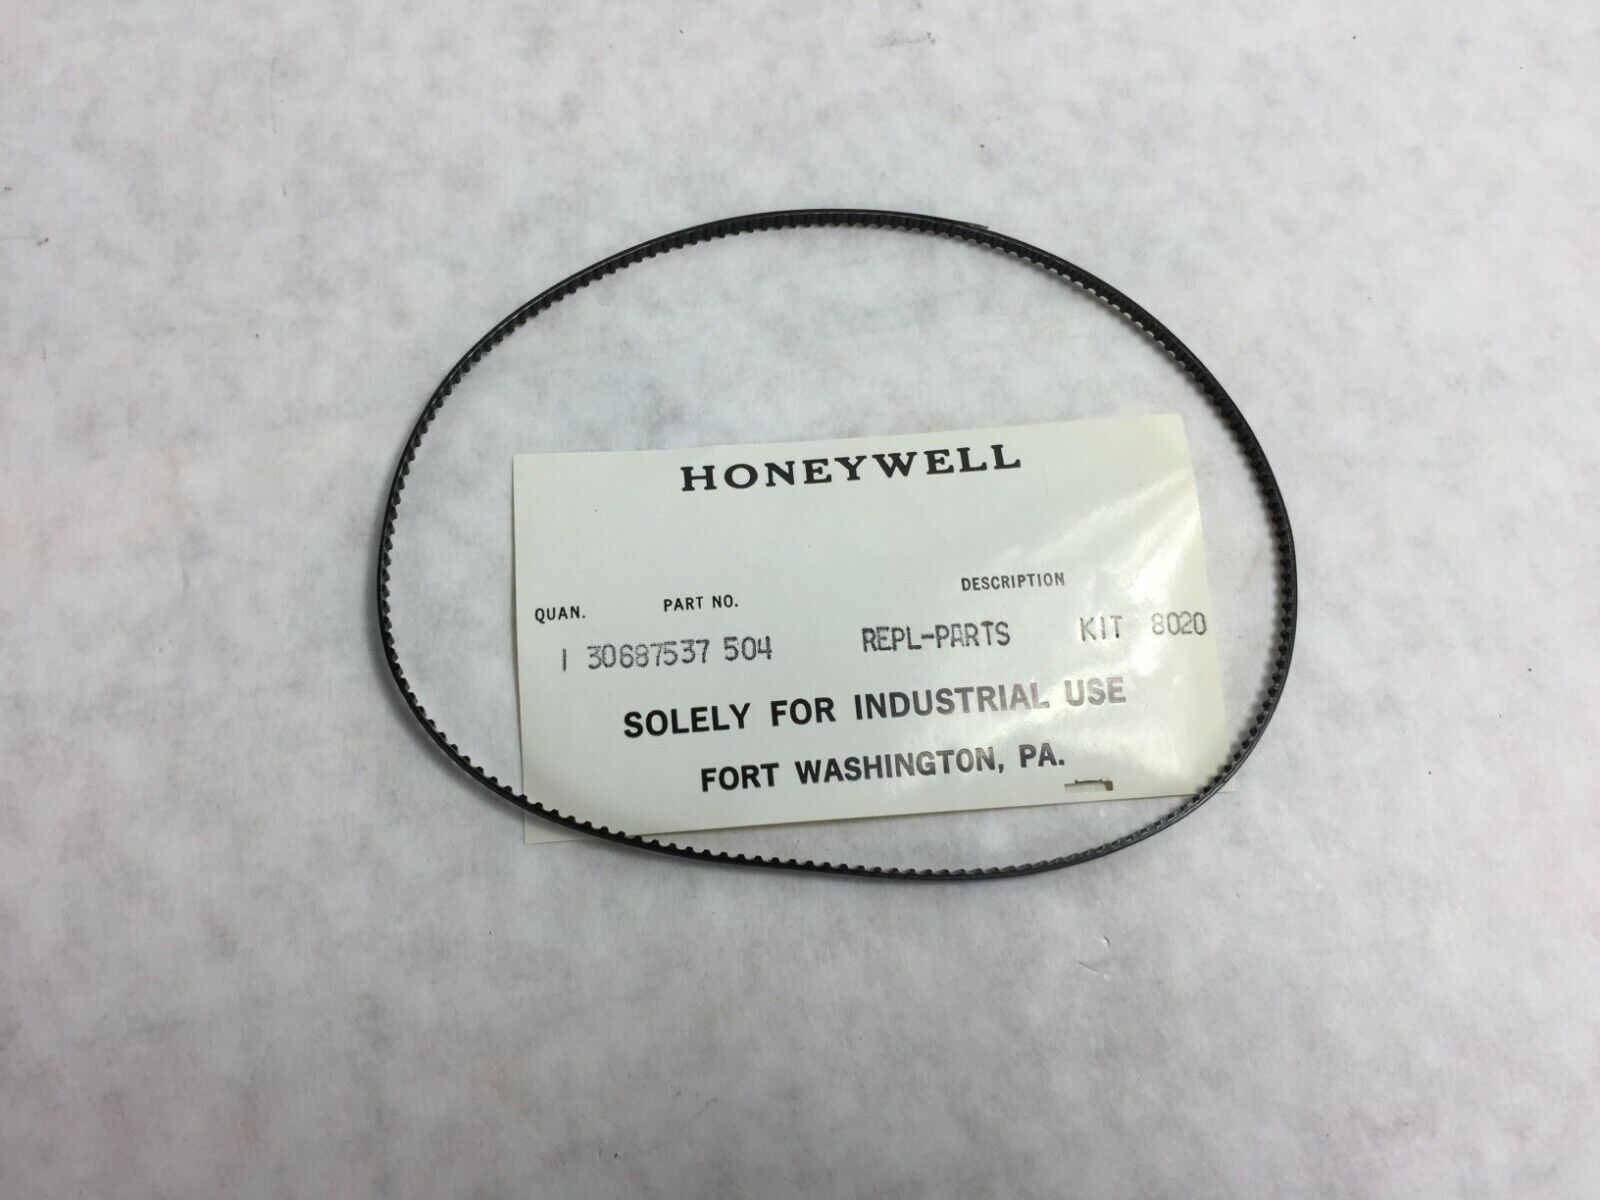 Honeywell 30687537-504 Gear Belt Kit 8020